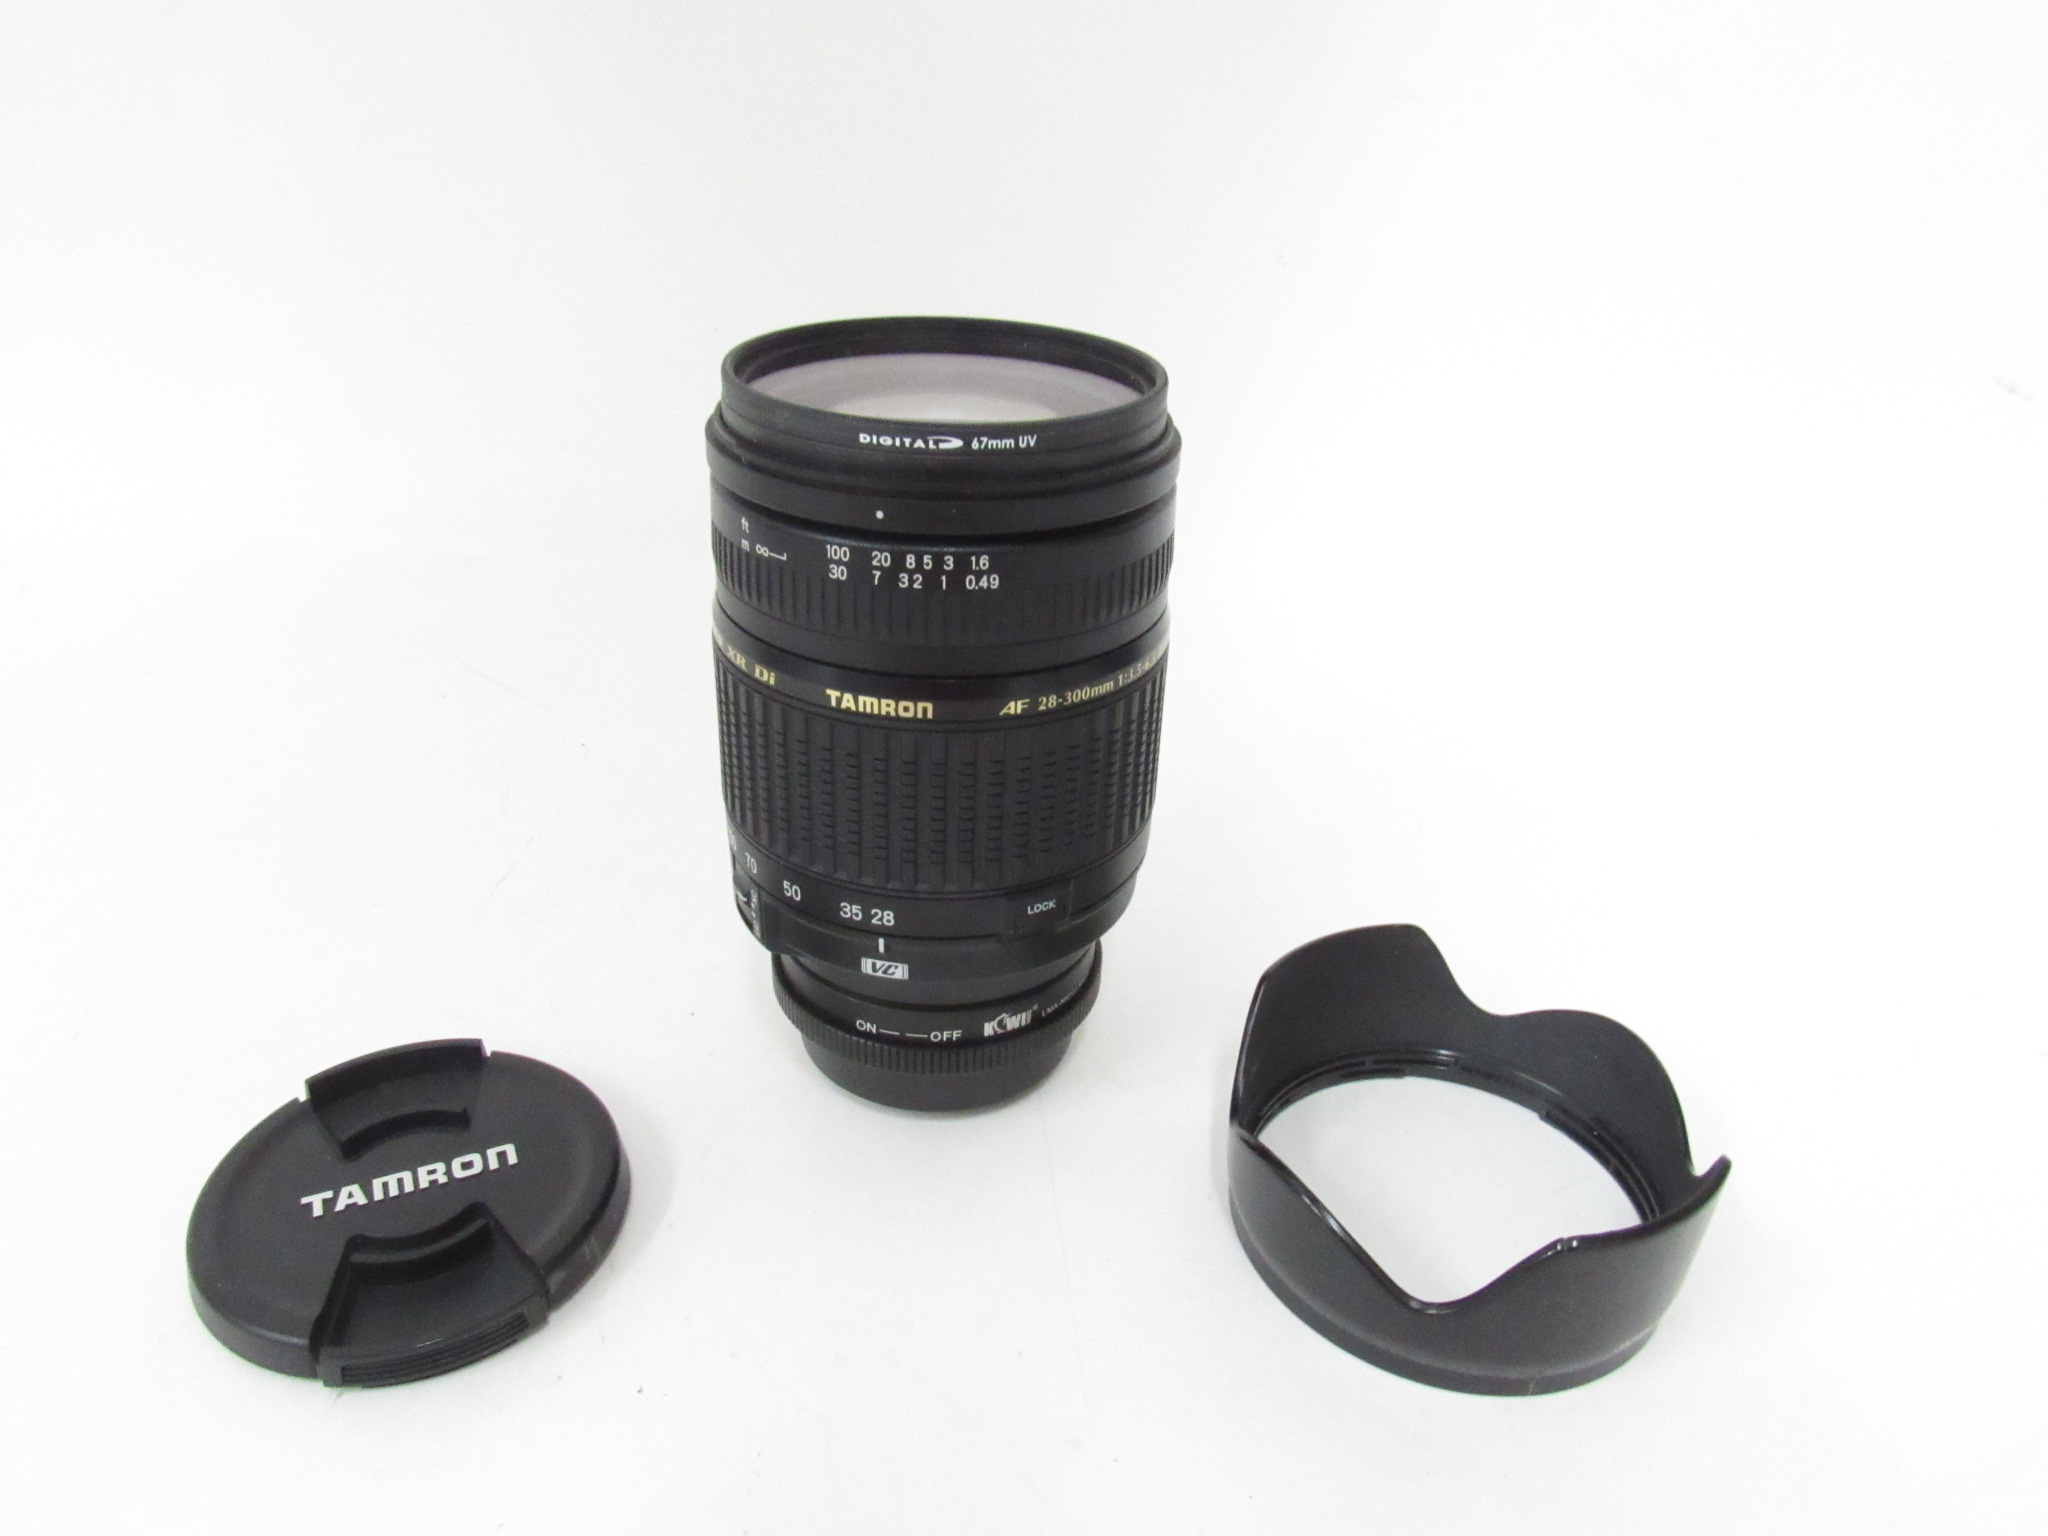 Tamron XR Di 28-300mm 1:3.5-6.3 (IF) Macro 67mm A20 Lens Black